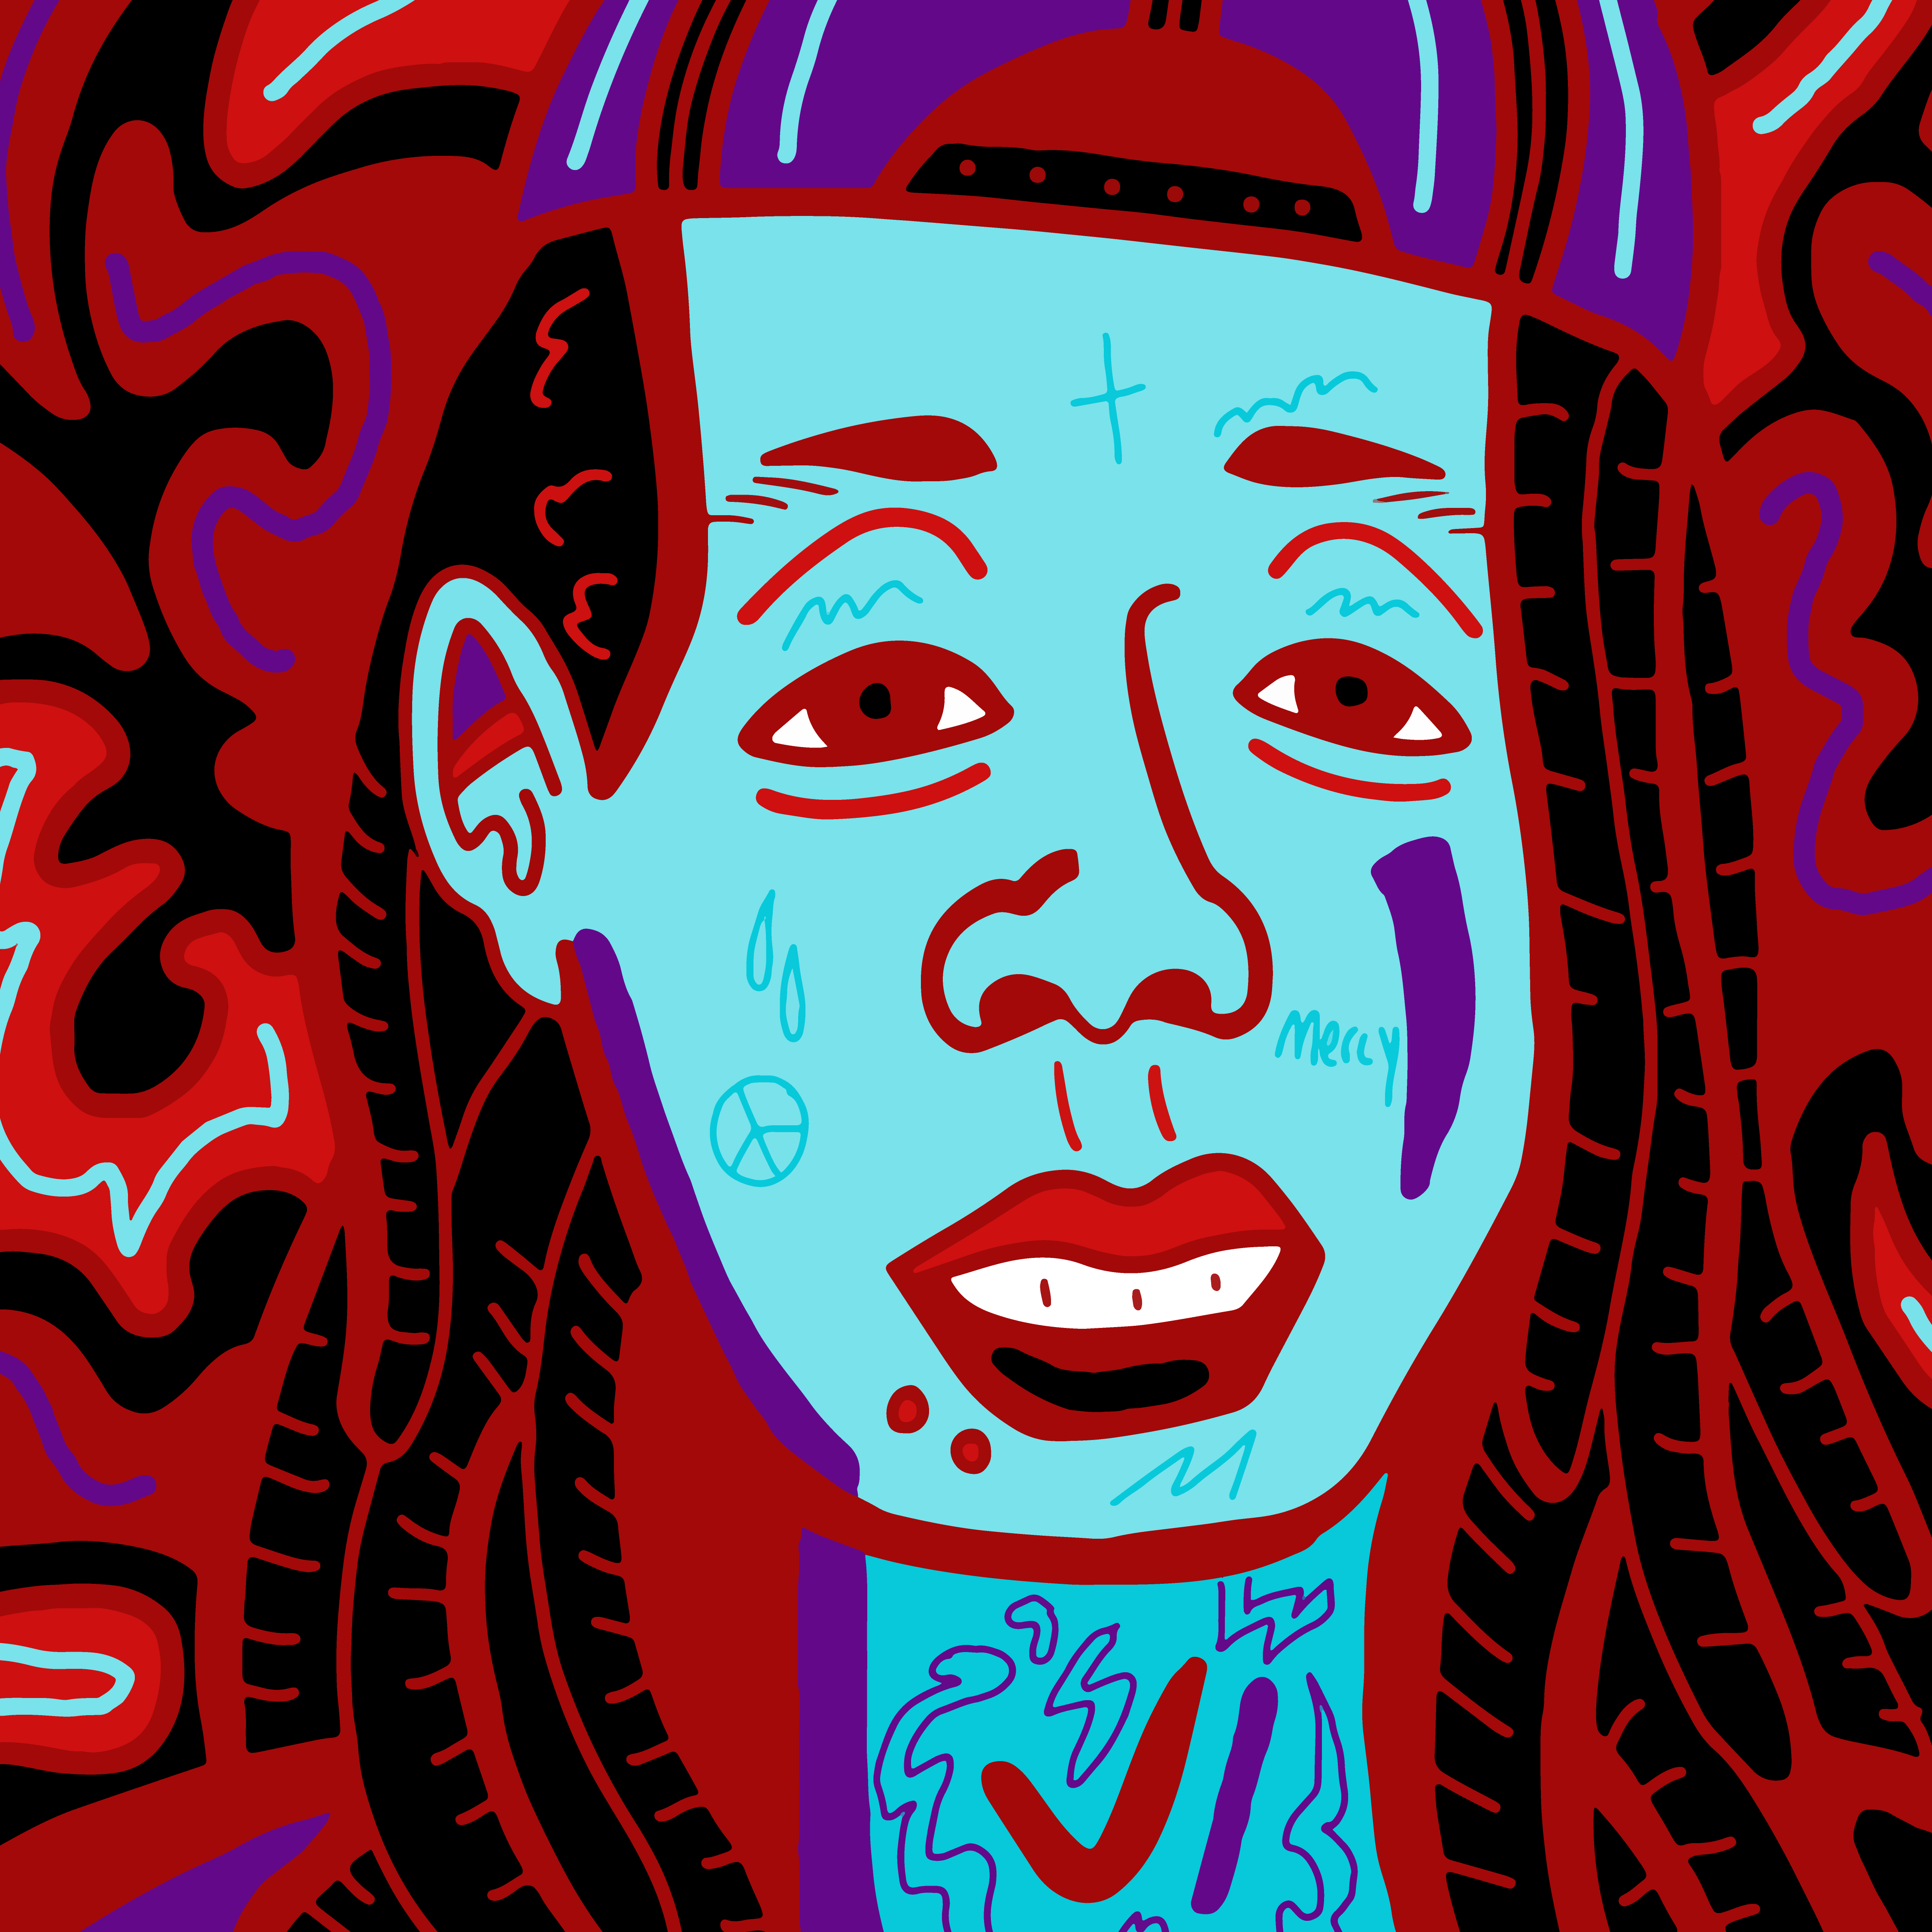 Lil Wayne illustration by Mina Tocalini